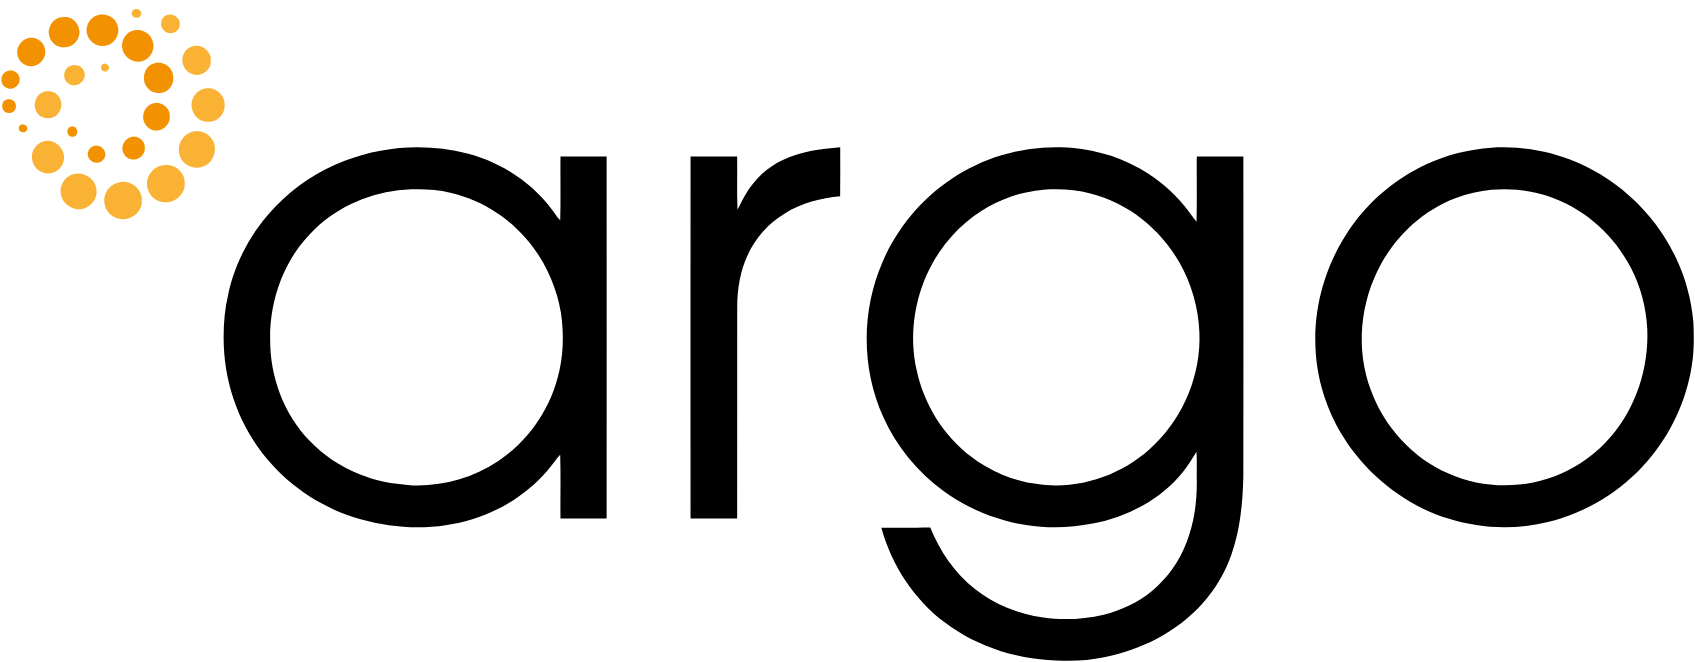 Argo Blockchain logo large (transparent PNG)